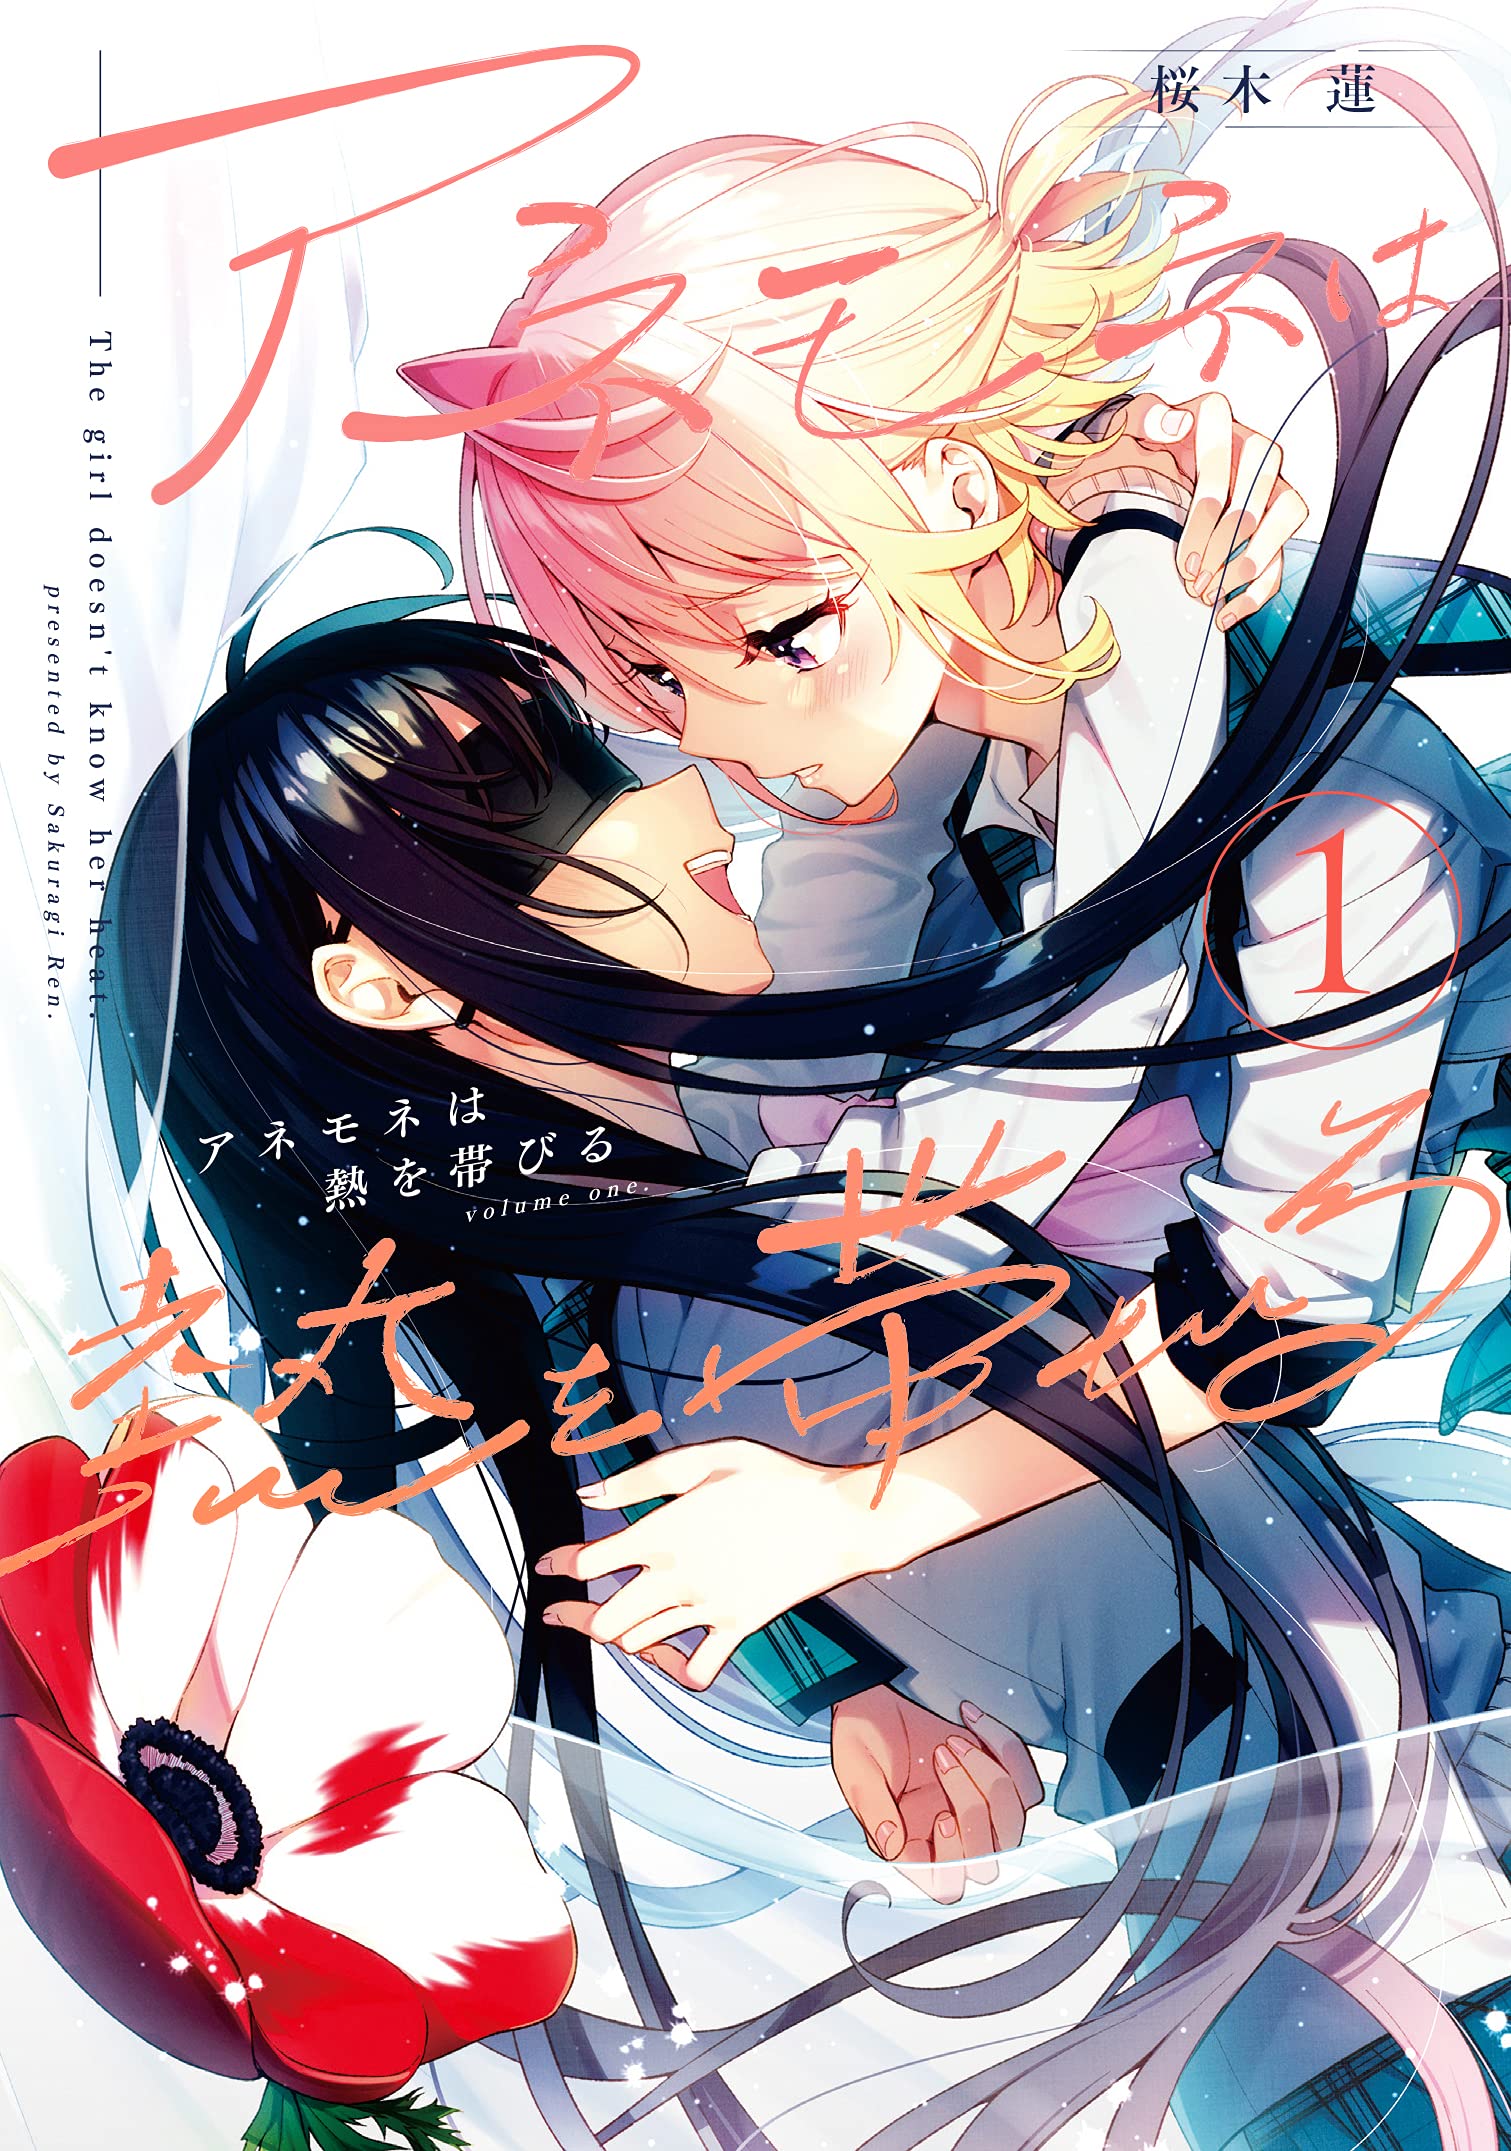 Stars in Heat Manga | Anime-Planet